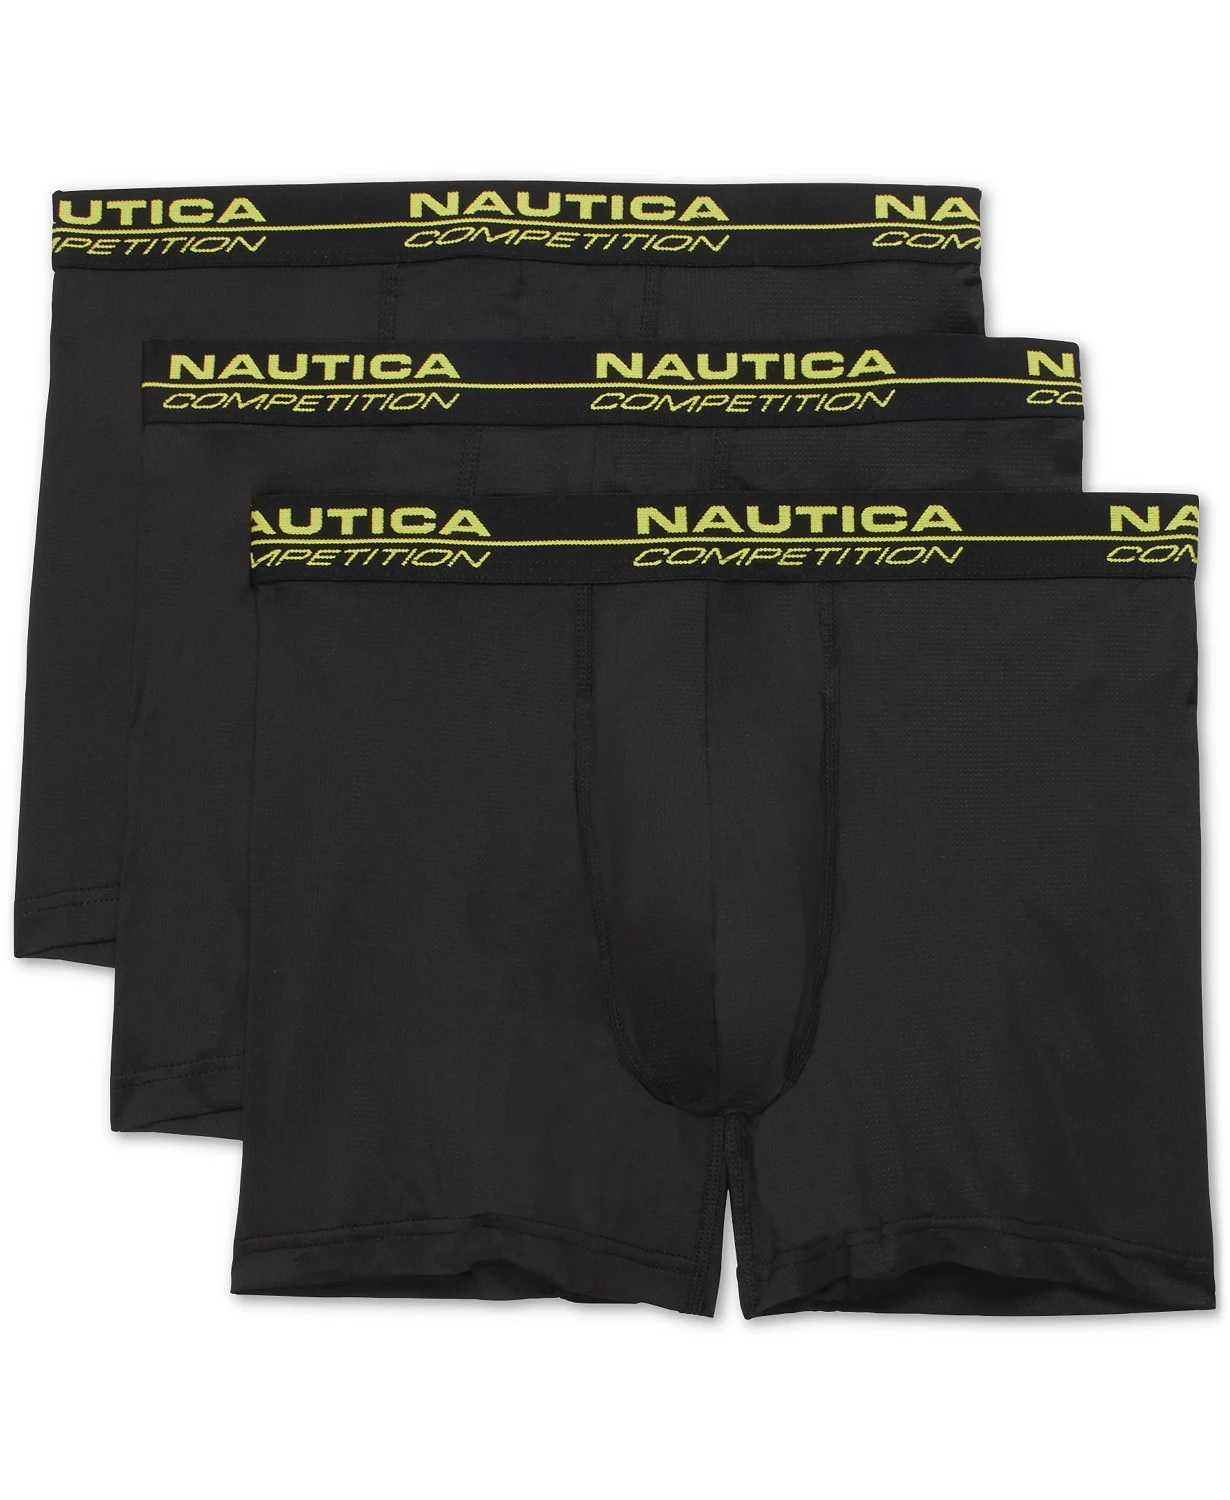 Blue Nautica Underwear for Men